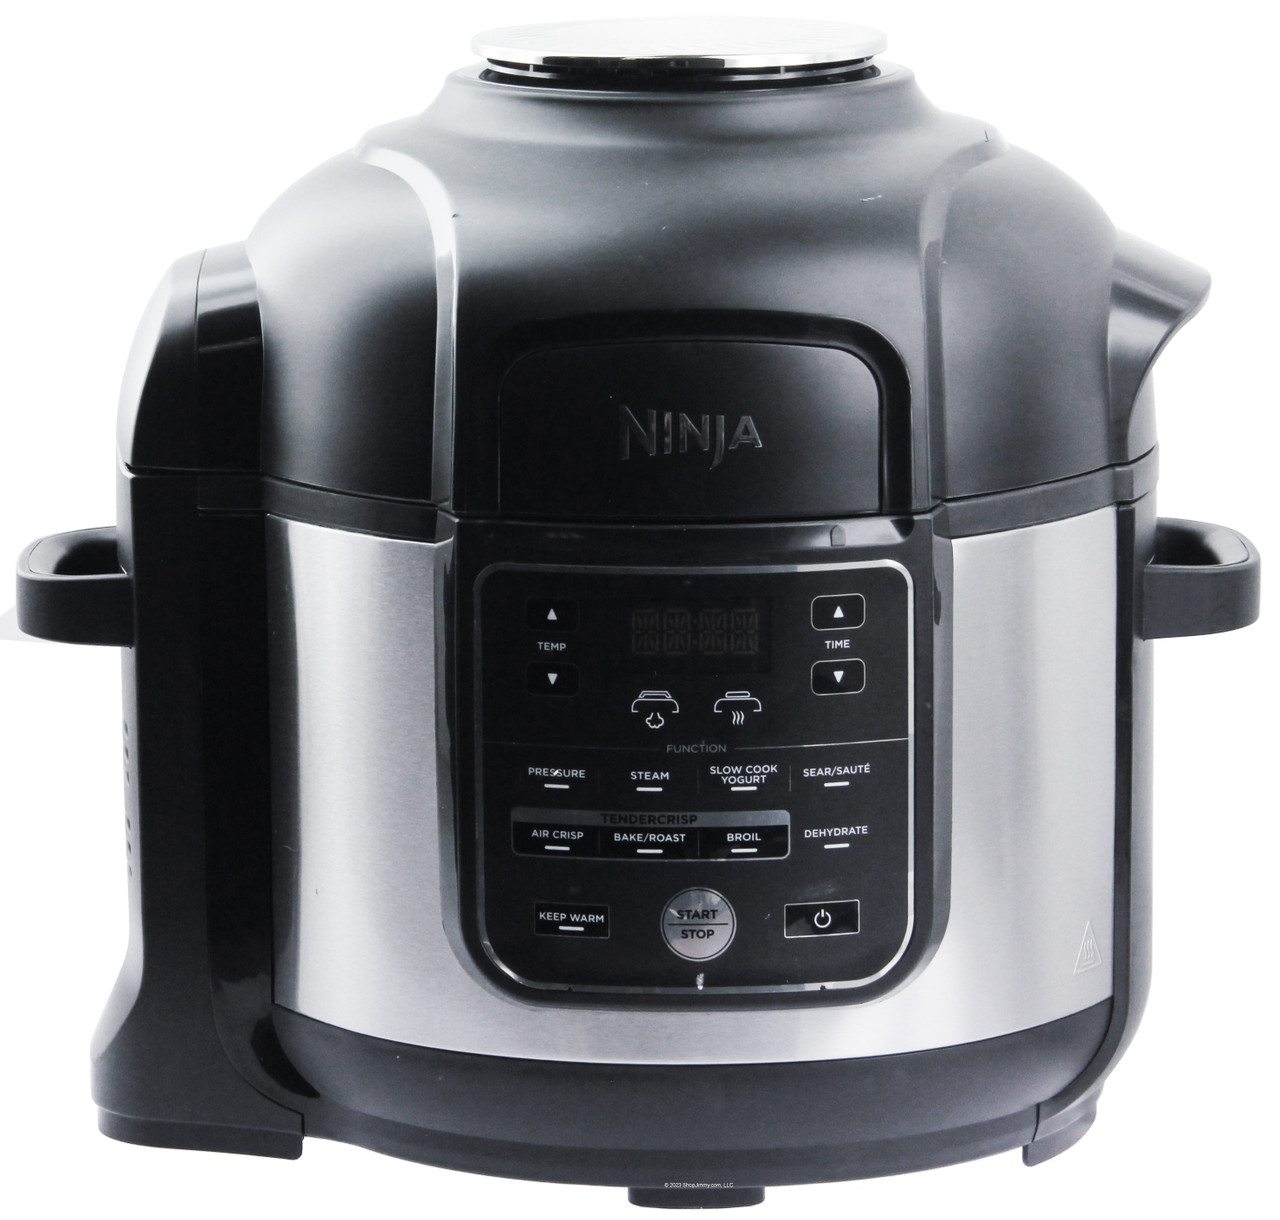 Ninja Foodi 10-in-1 8-Quart XL Pressure Cooker Air Fryer Multicooker,  Stainless, OS400 